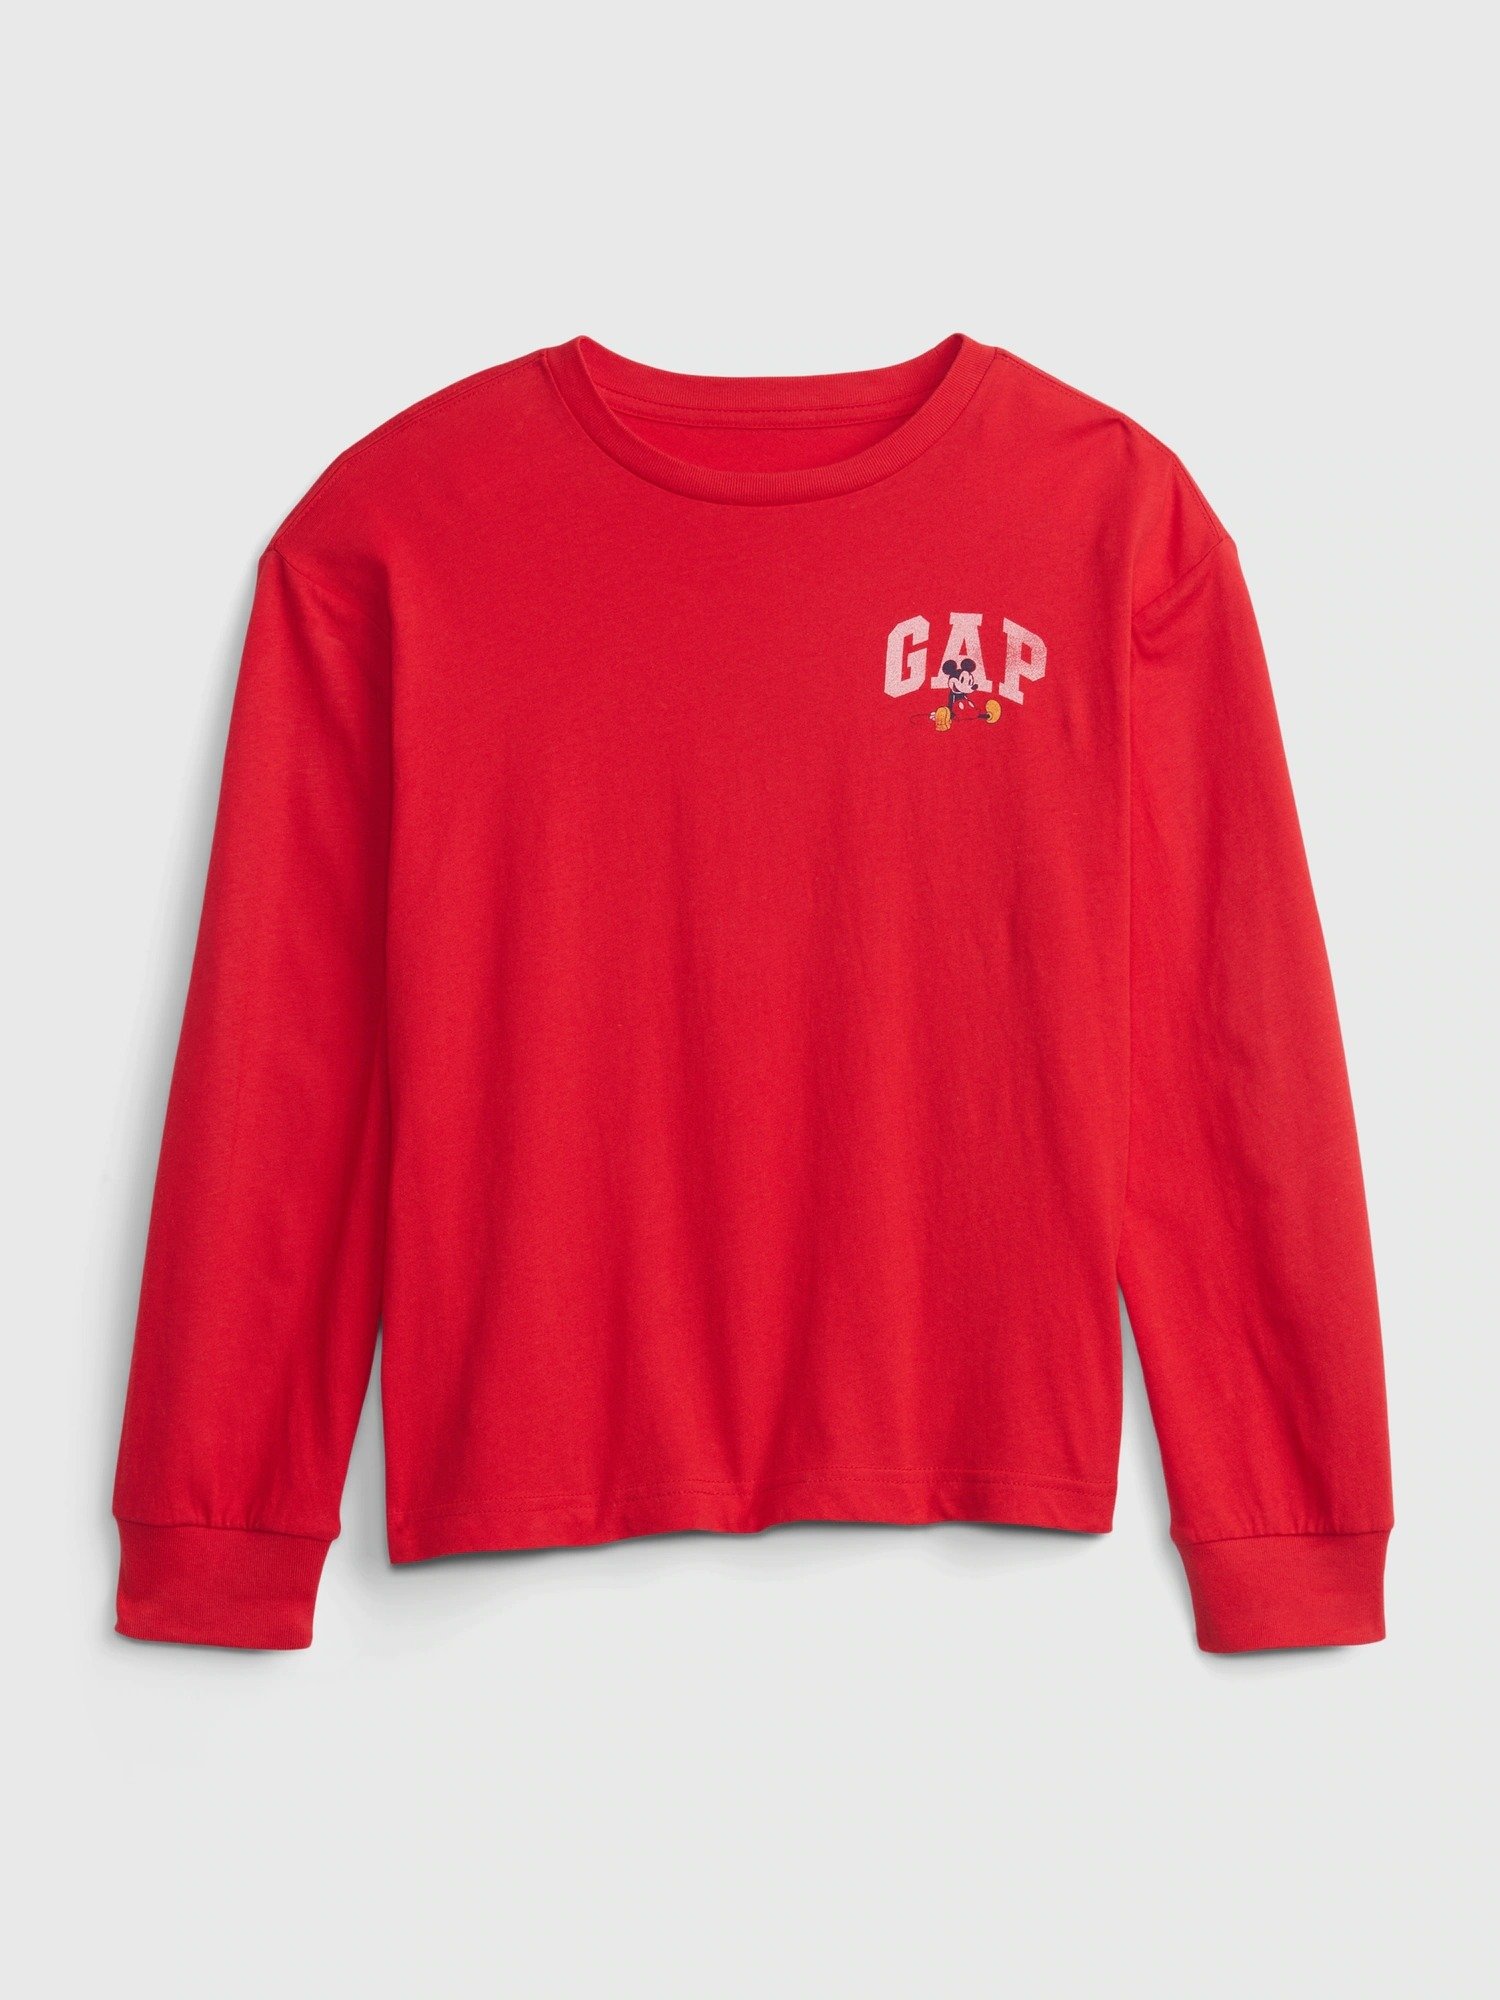 Gap x Disney Grafik Baskılı T-Shirt product image